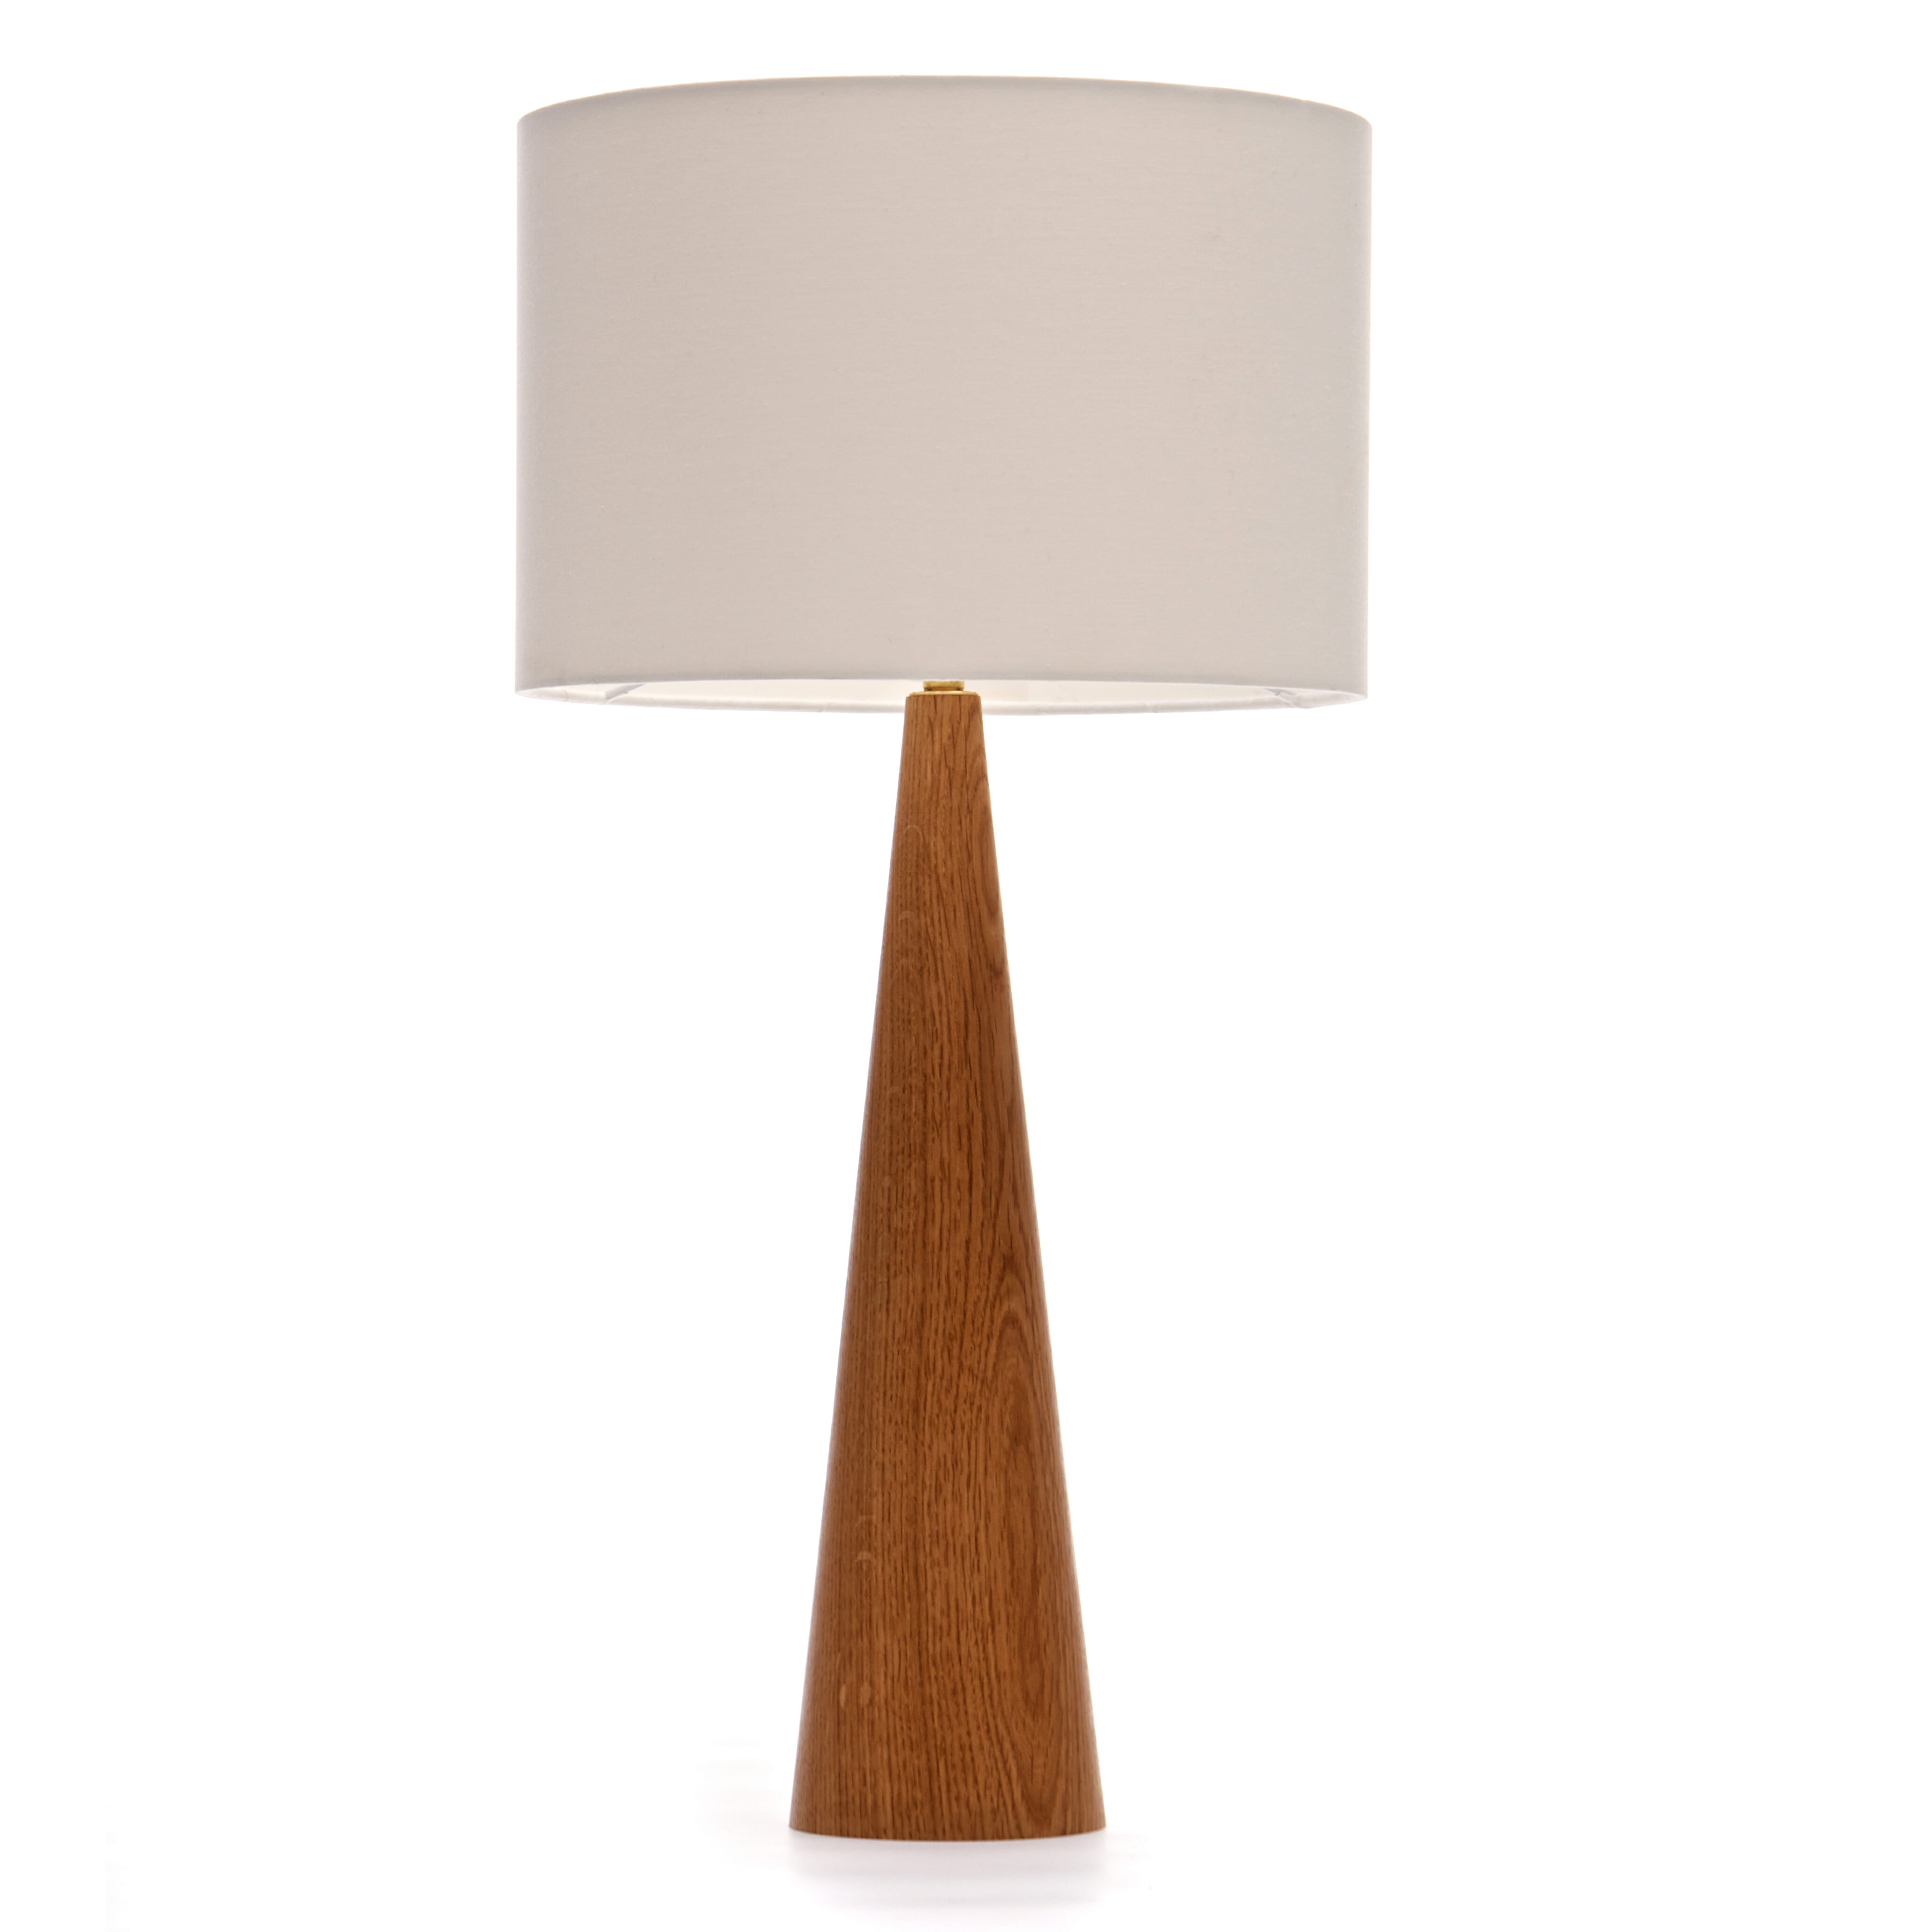 Oak Table Lamp Wooden, Handmade Wooden Table Lamps